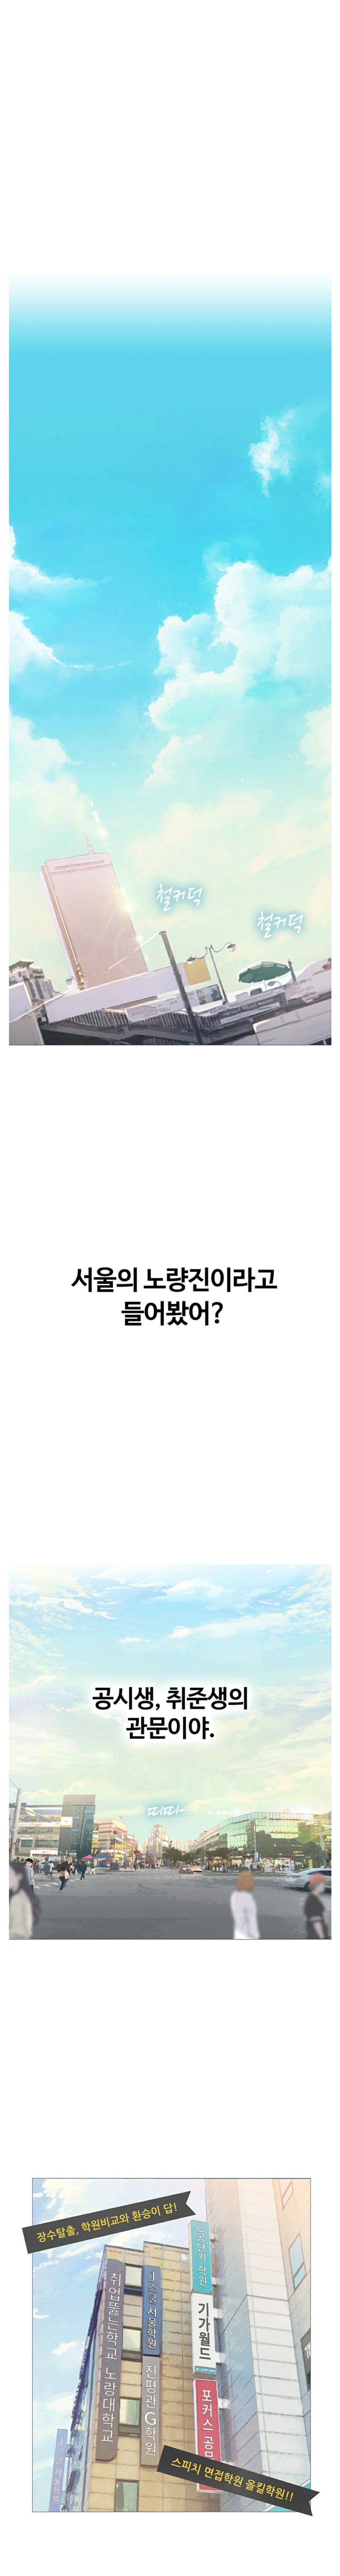 Should I Study at Noryangjin? Raw - Chapter 1 Page 1